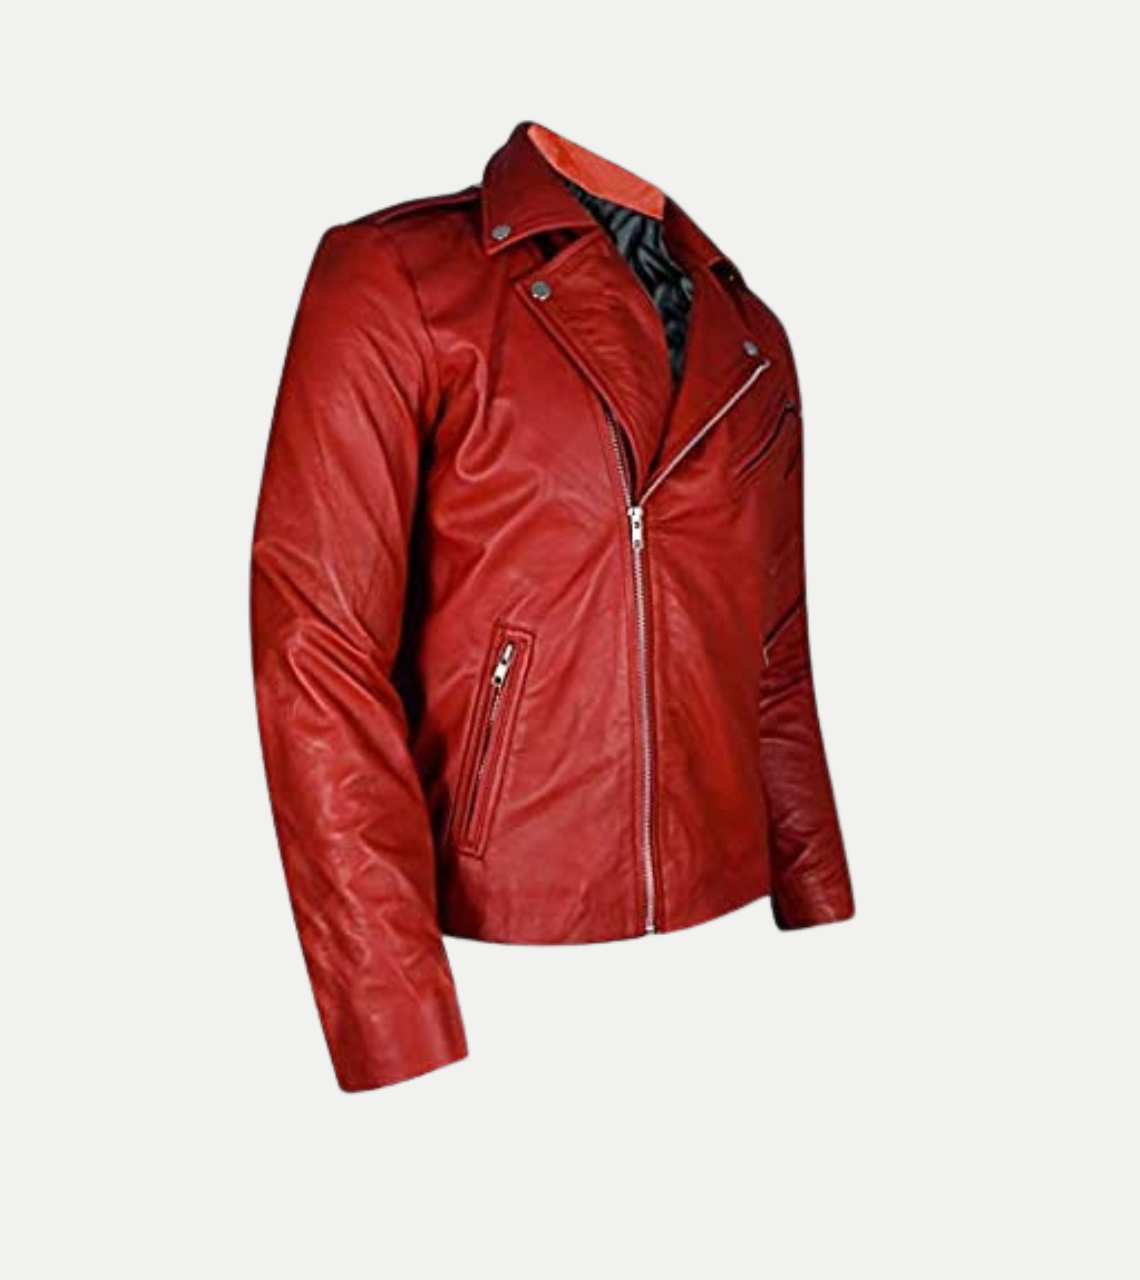 Fergal Devitt Red Leather Jacket Zippered